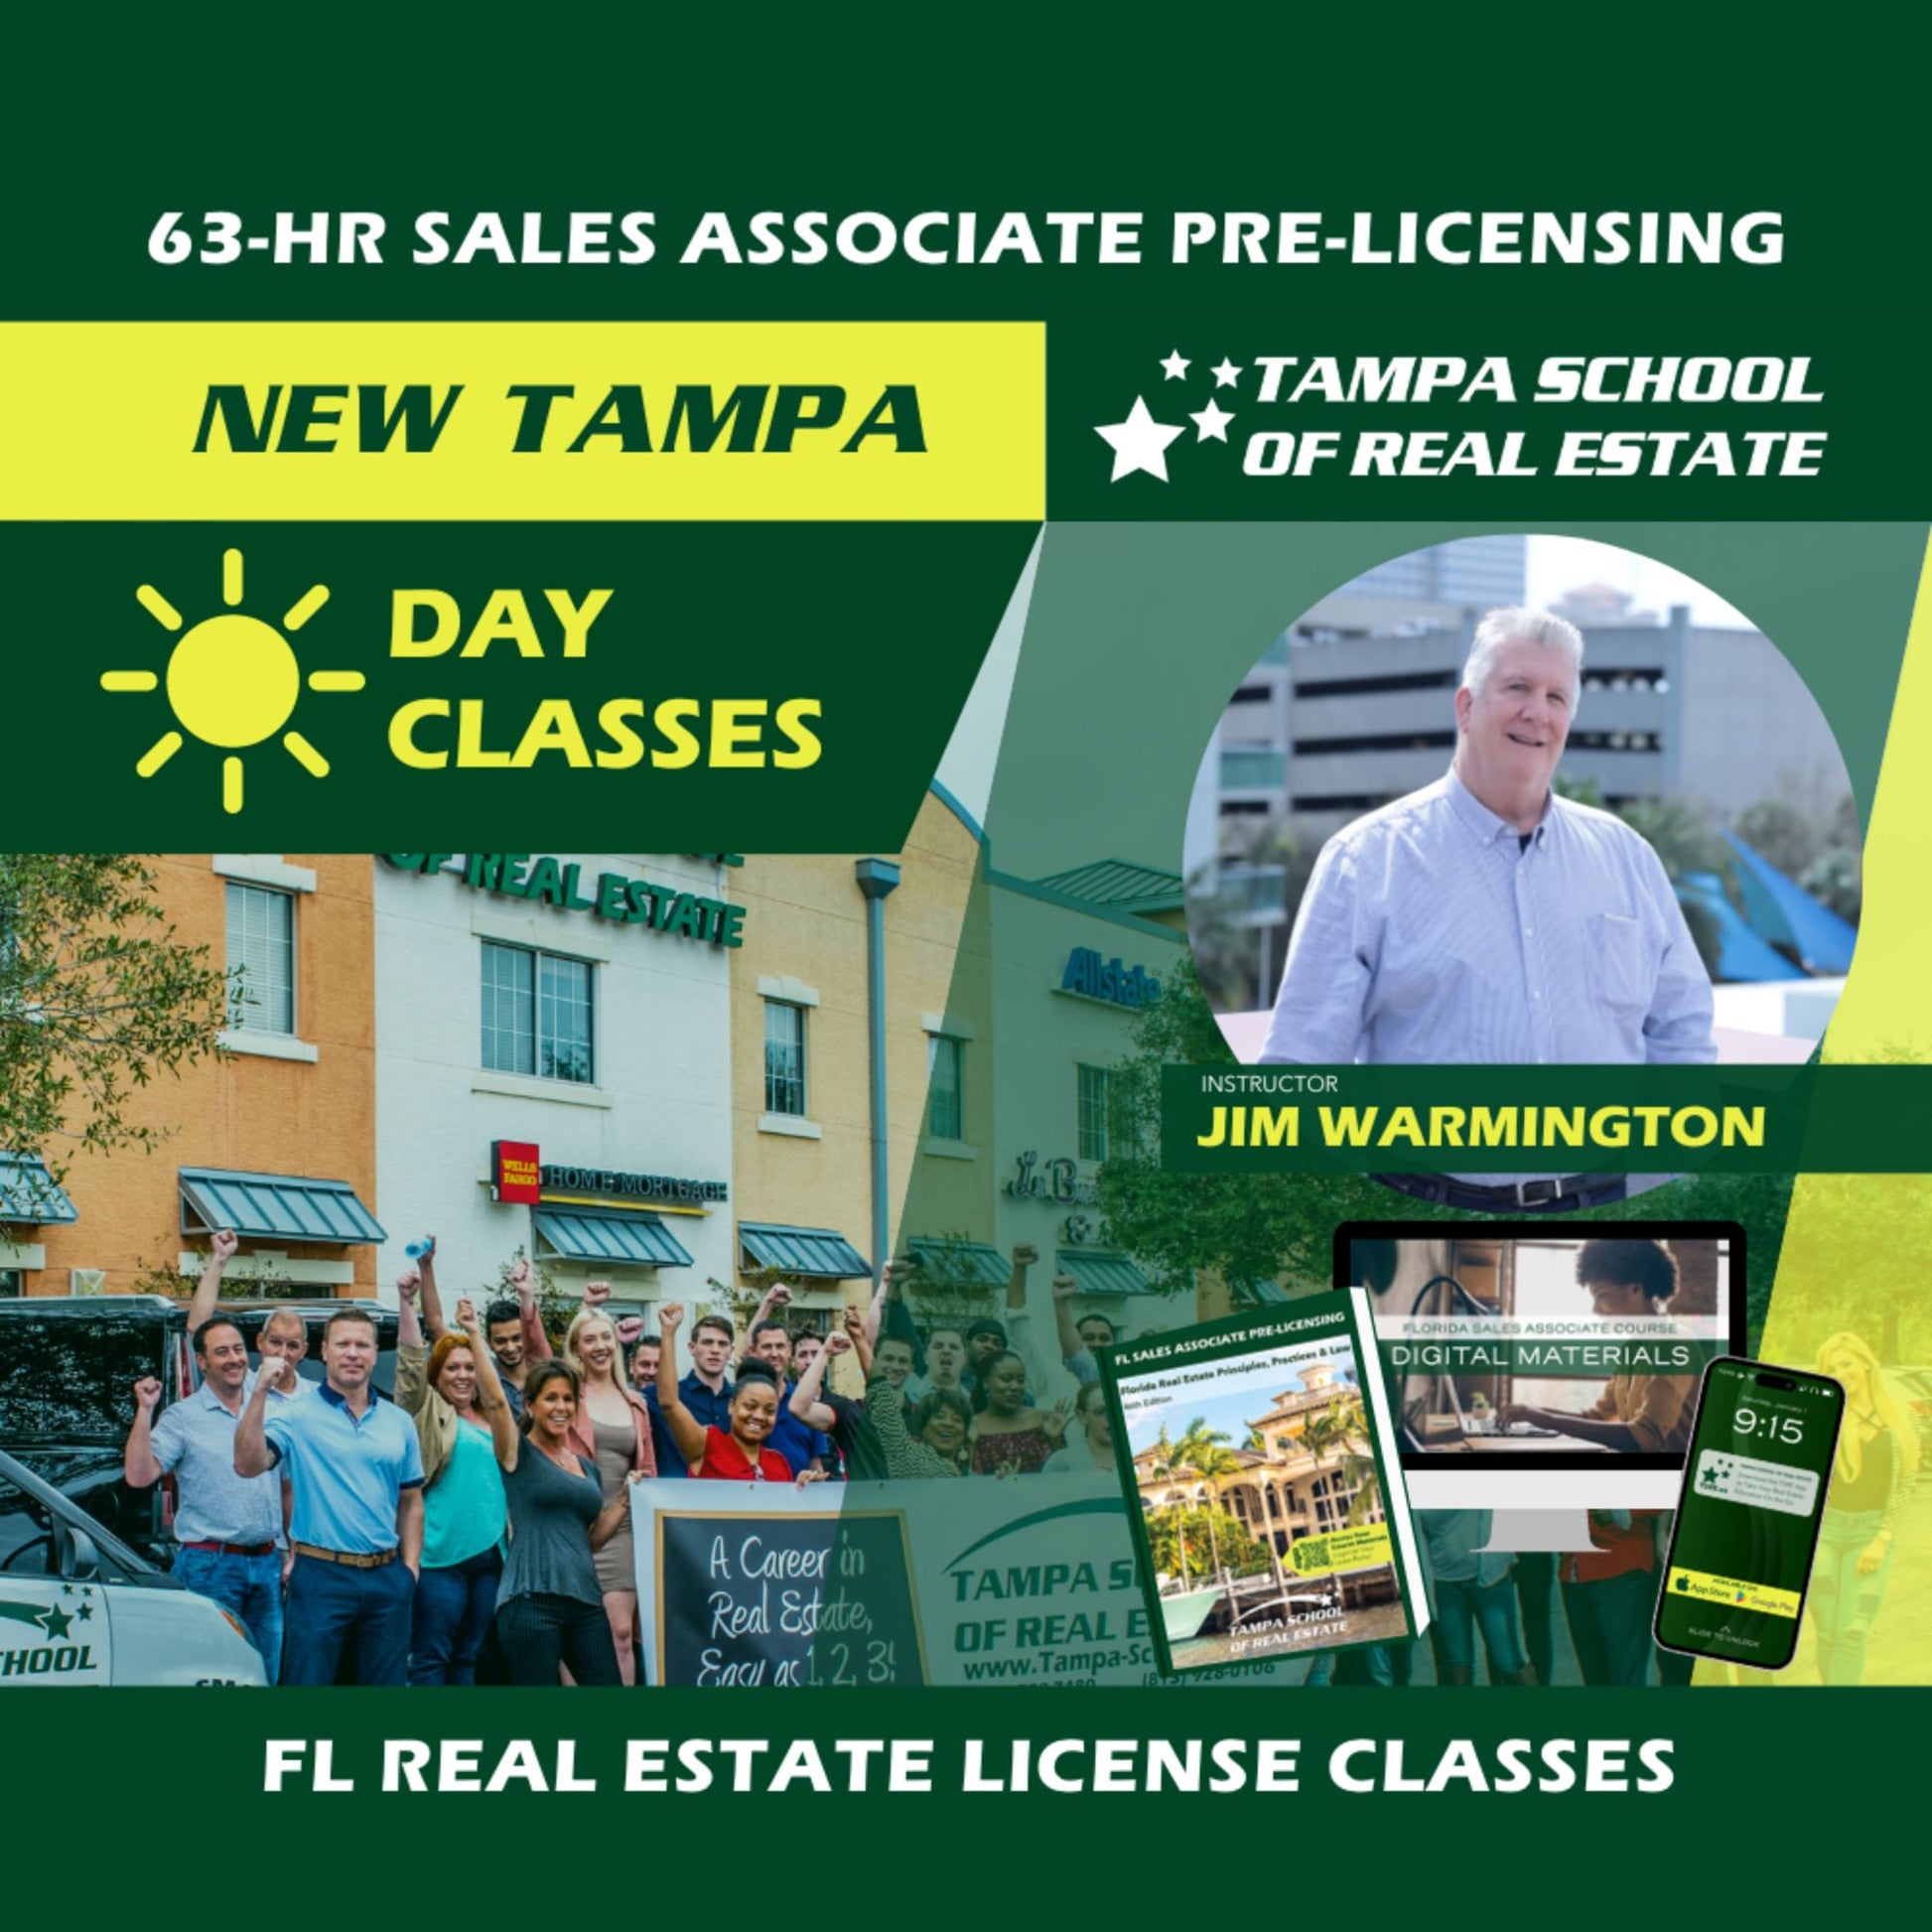 New Tampa | Nov 6 8:30am | 63-HR FL Real Estate Classes SLPRE TSRE New Tampa | Tampa School of Real Estate 